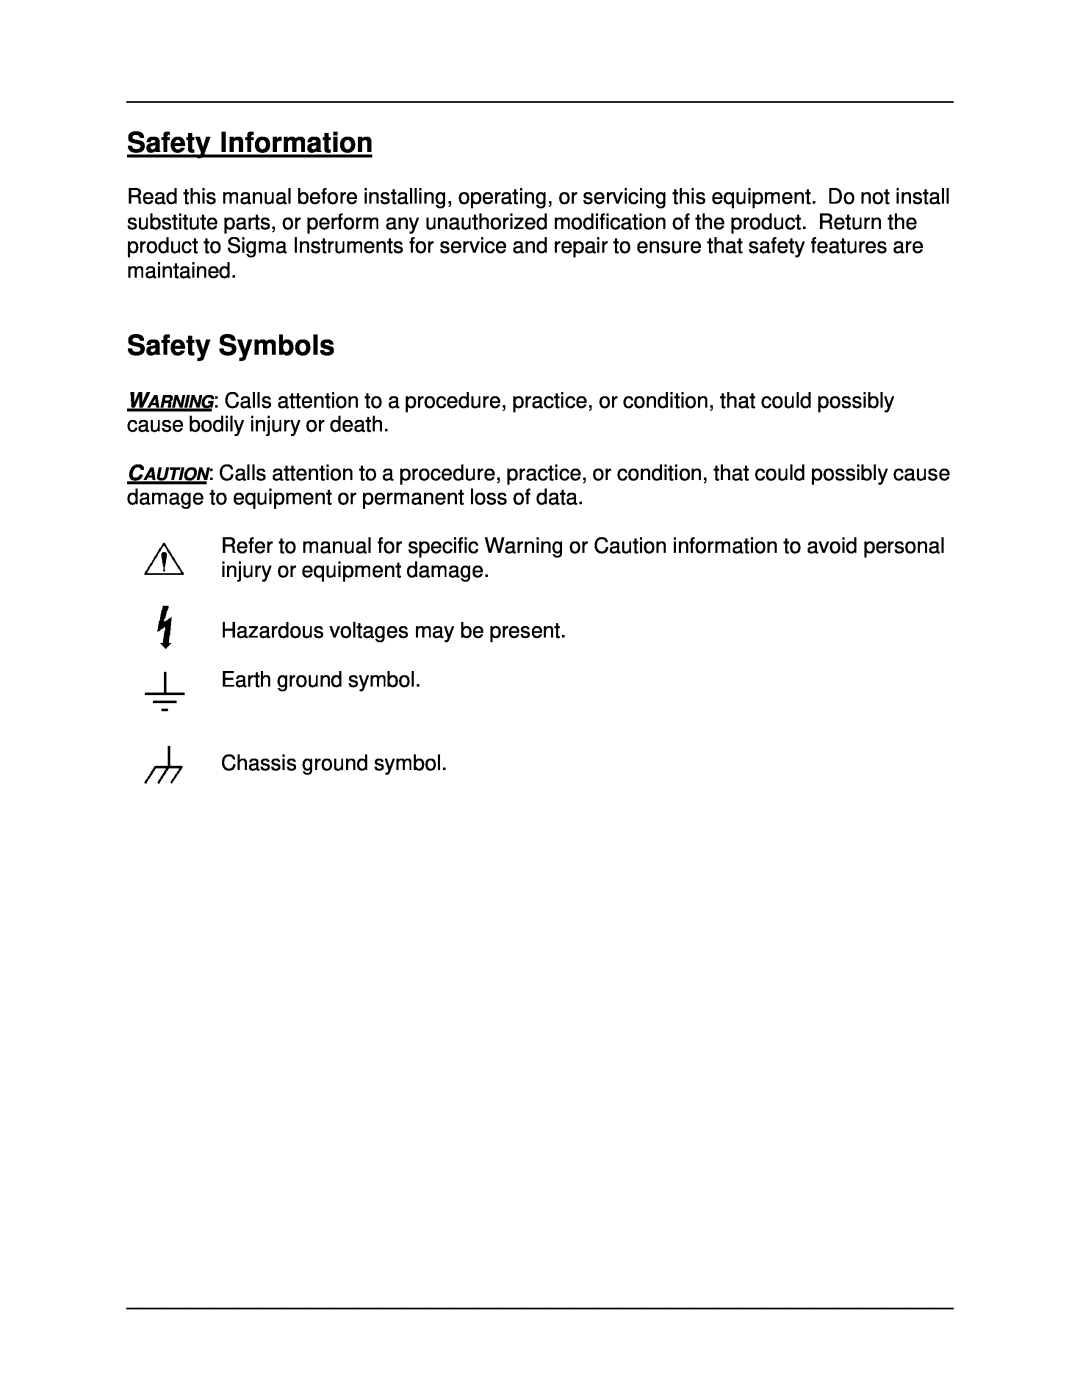 Sigma SQM-160 manual Safety Information, Safety Symbols 